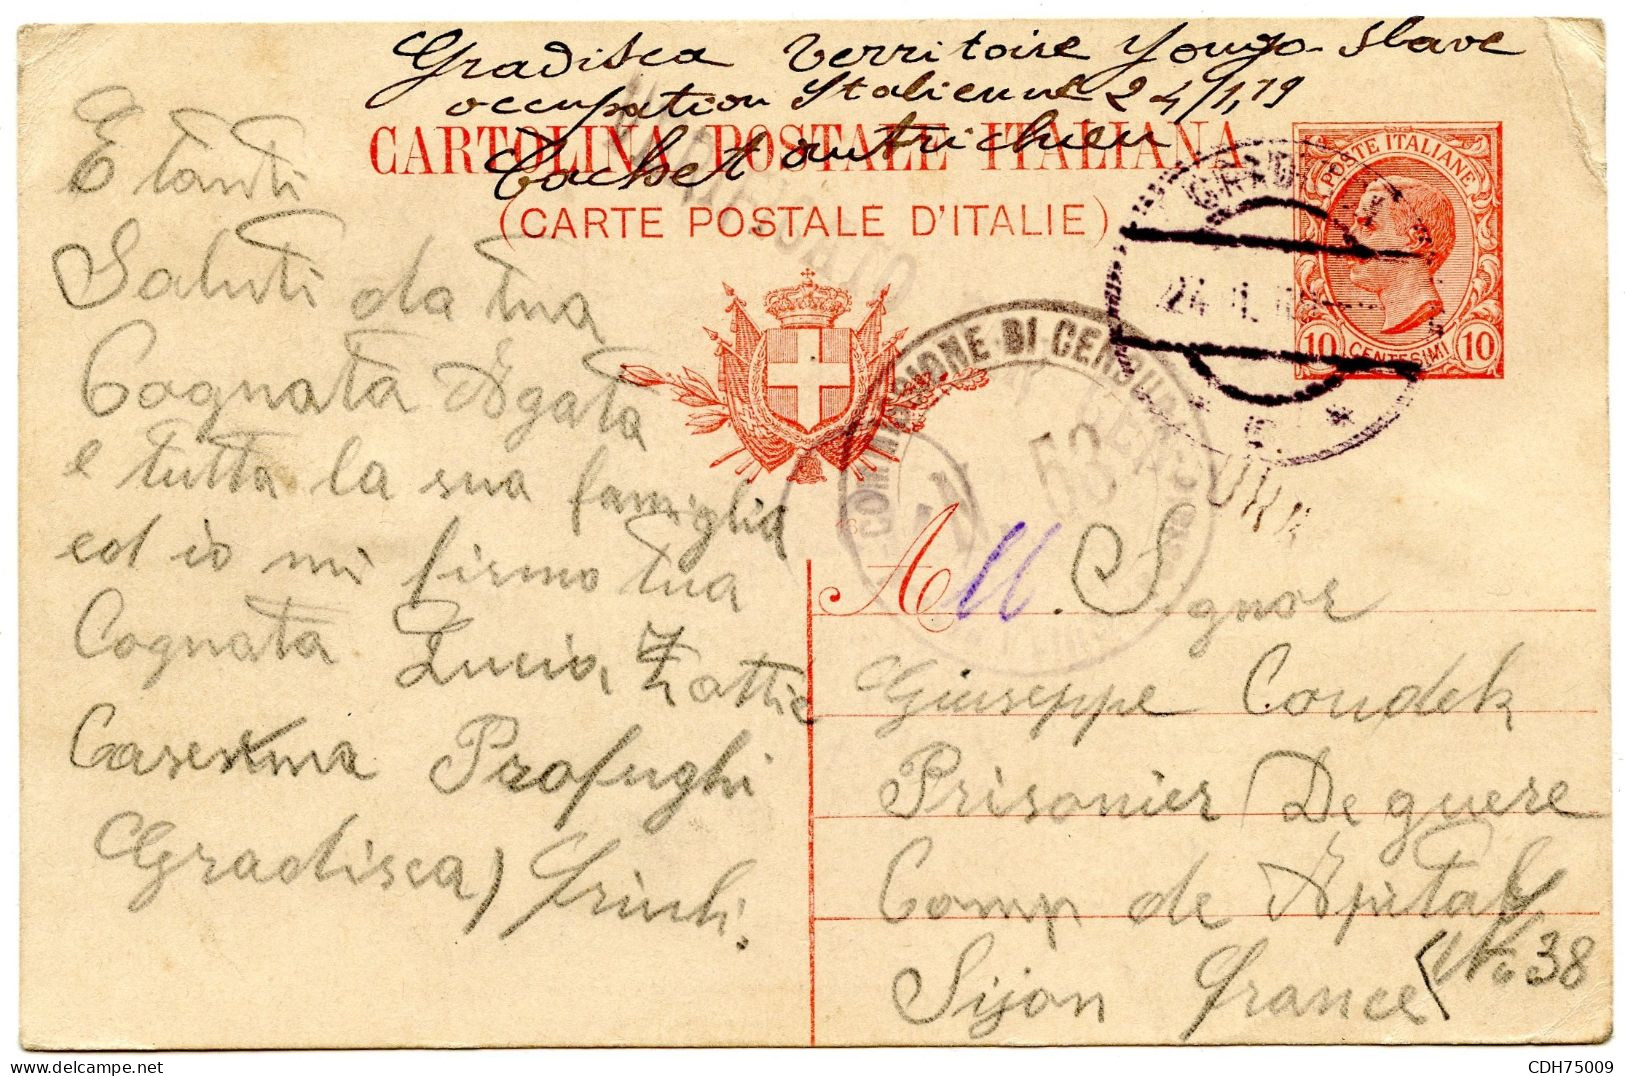 ITALIE - CARTE POSTALE 10C DE GRADISCA POUR LA FRANCE, 1919 - Venezia Giulia